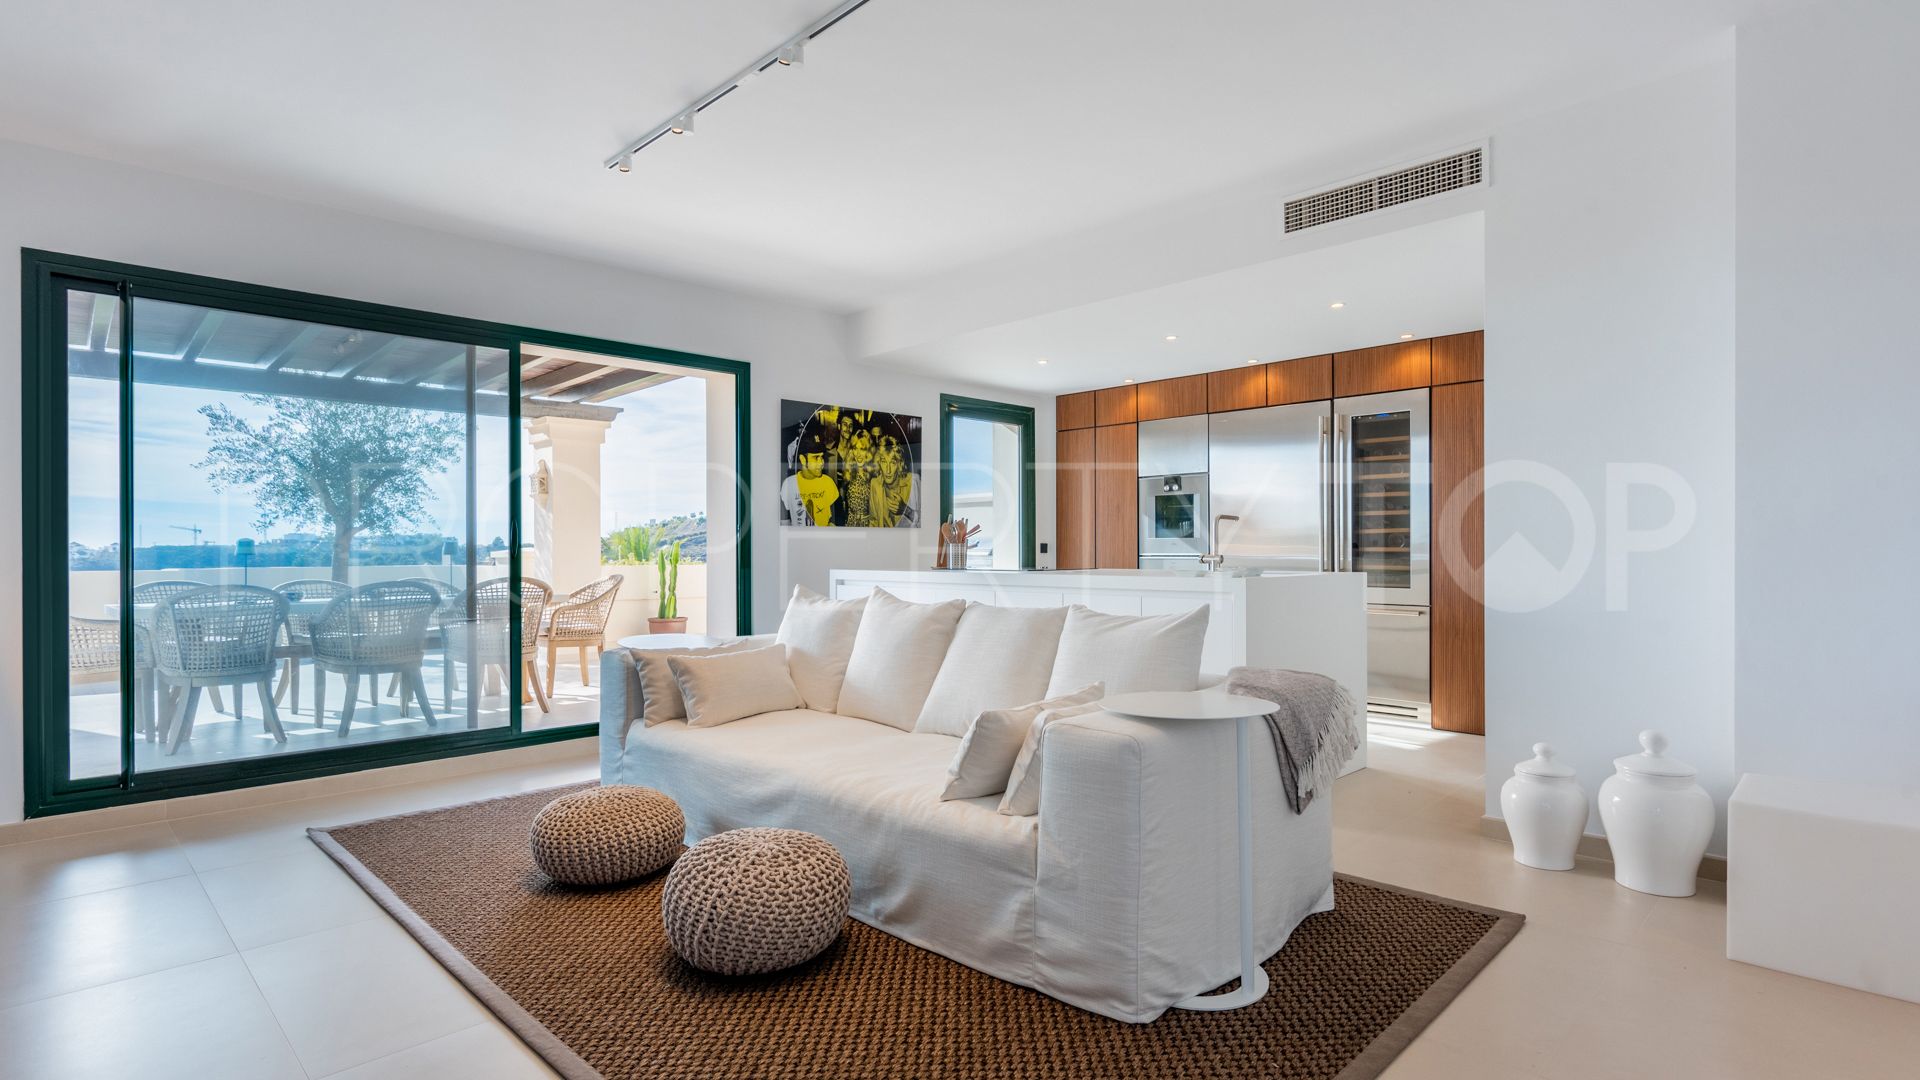 Los Capanes del Golf 3 bedrooms duplex penthouse for sale